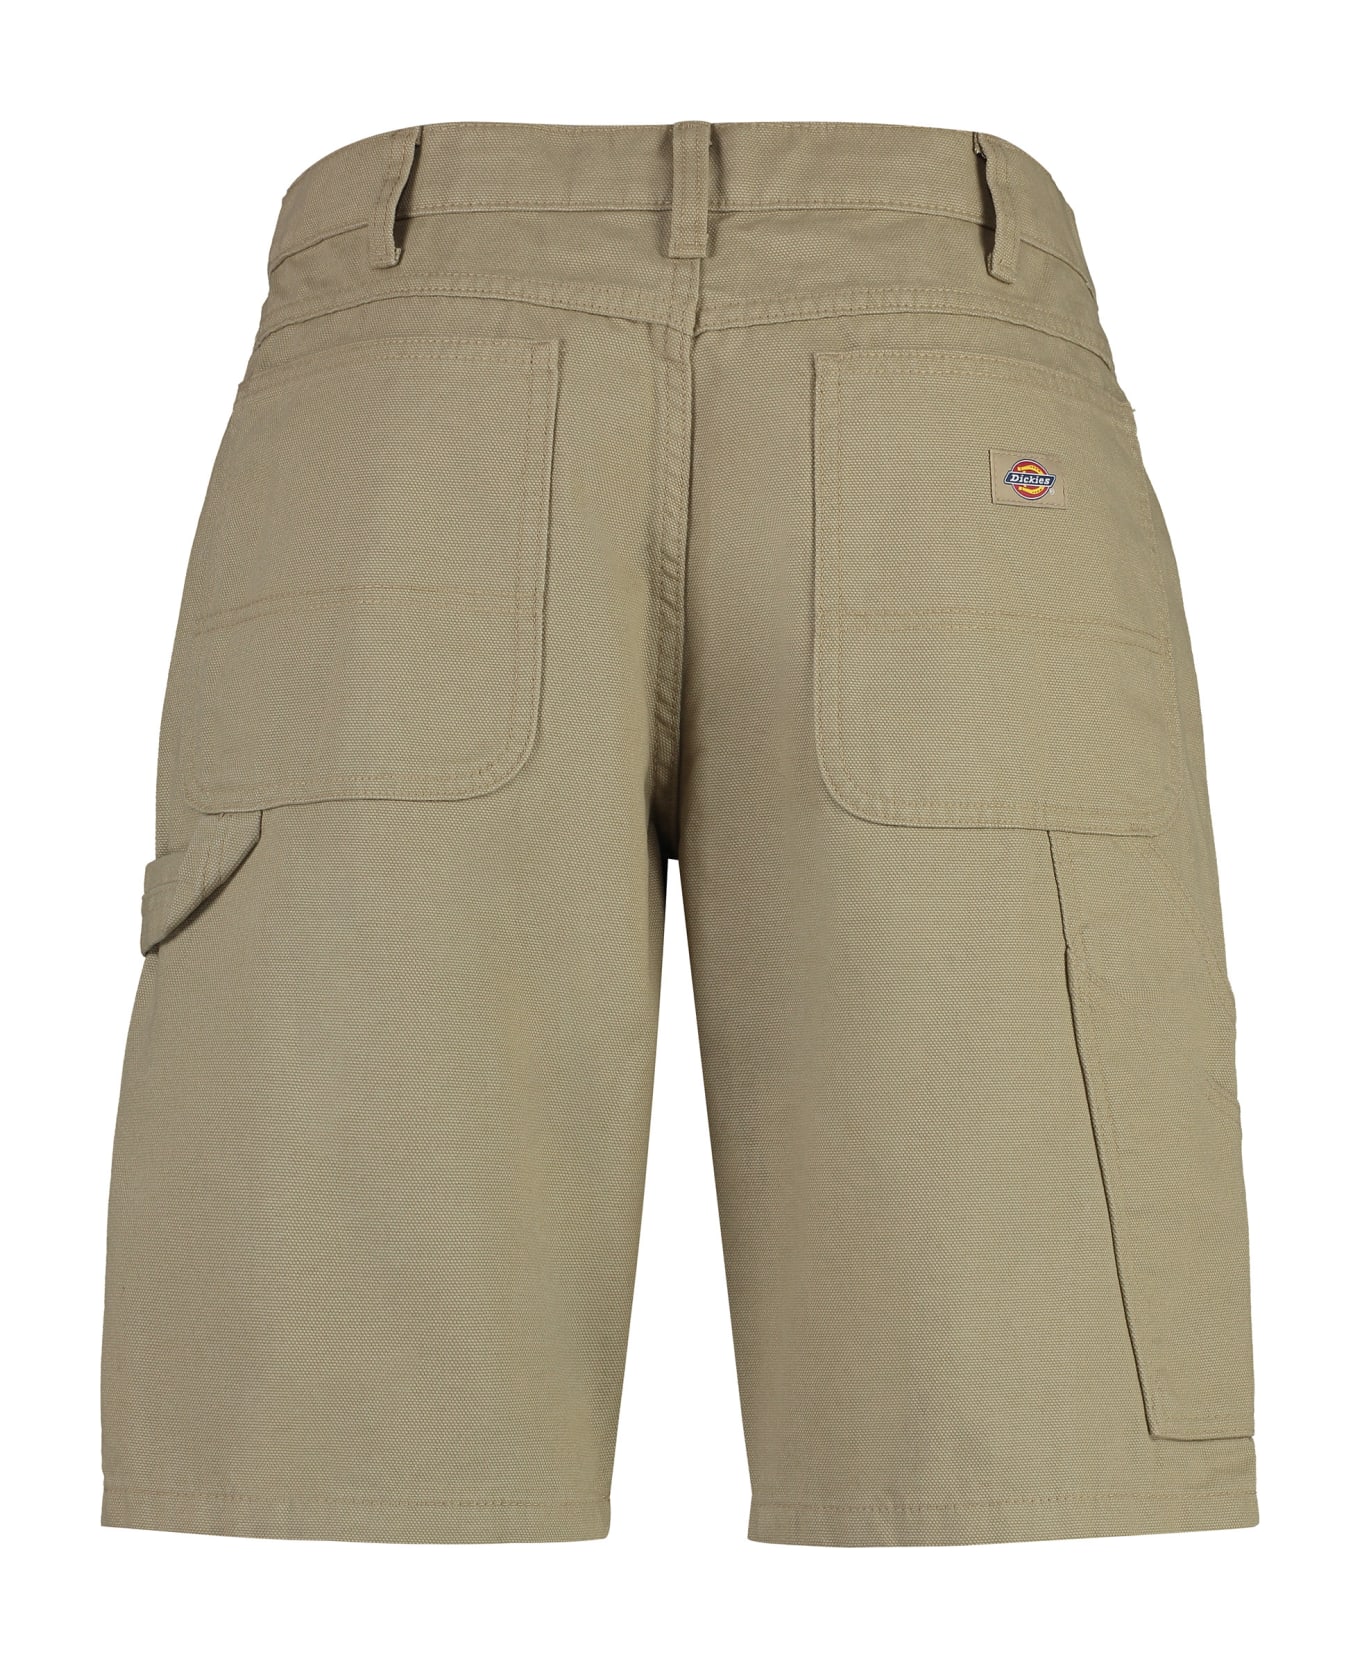 Dickies Duck Cotton Shorts - Beige